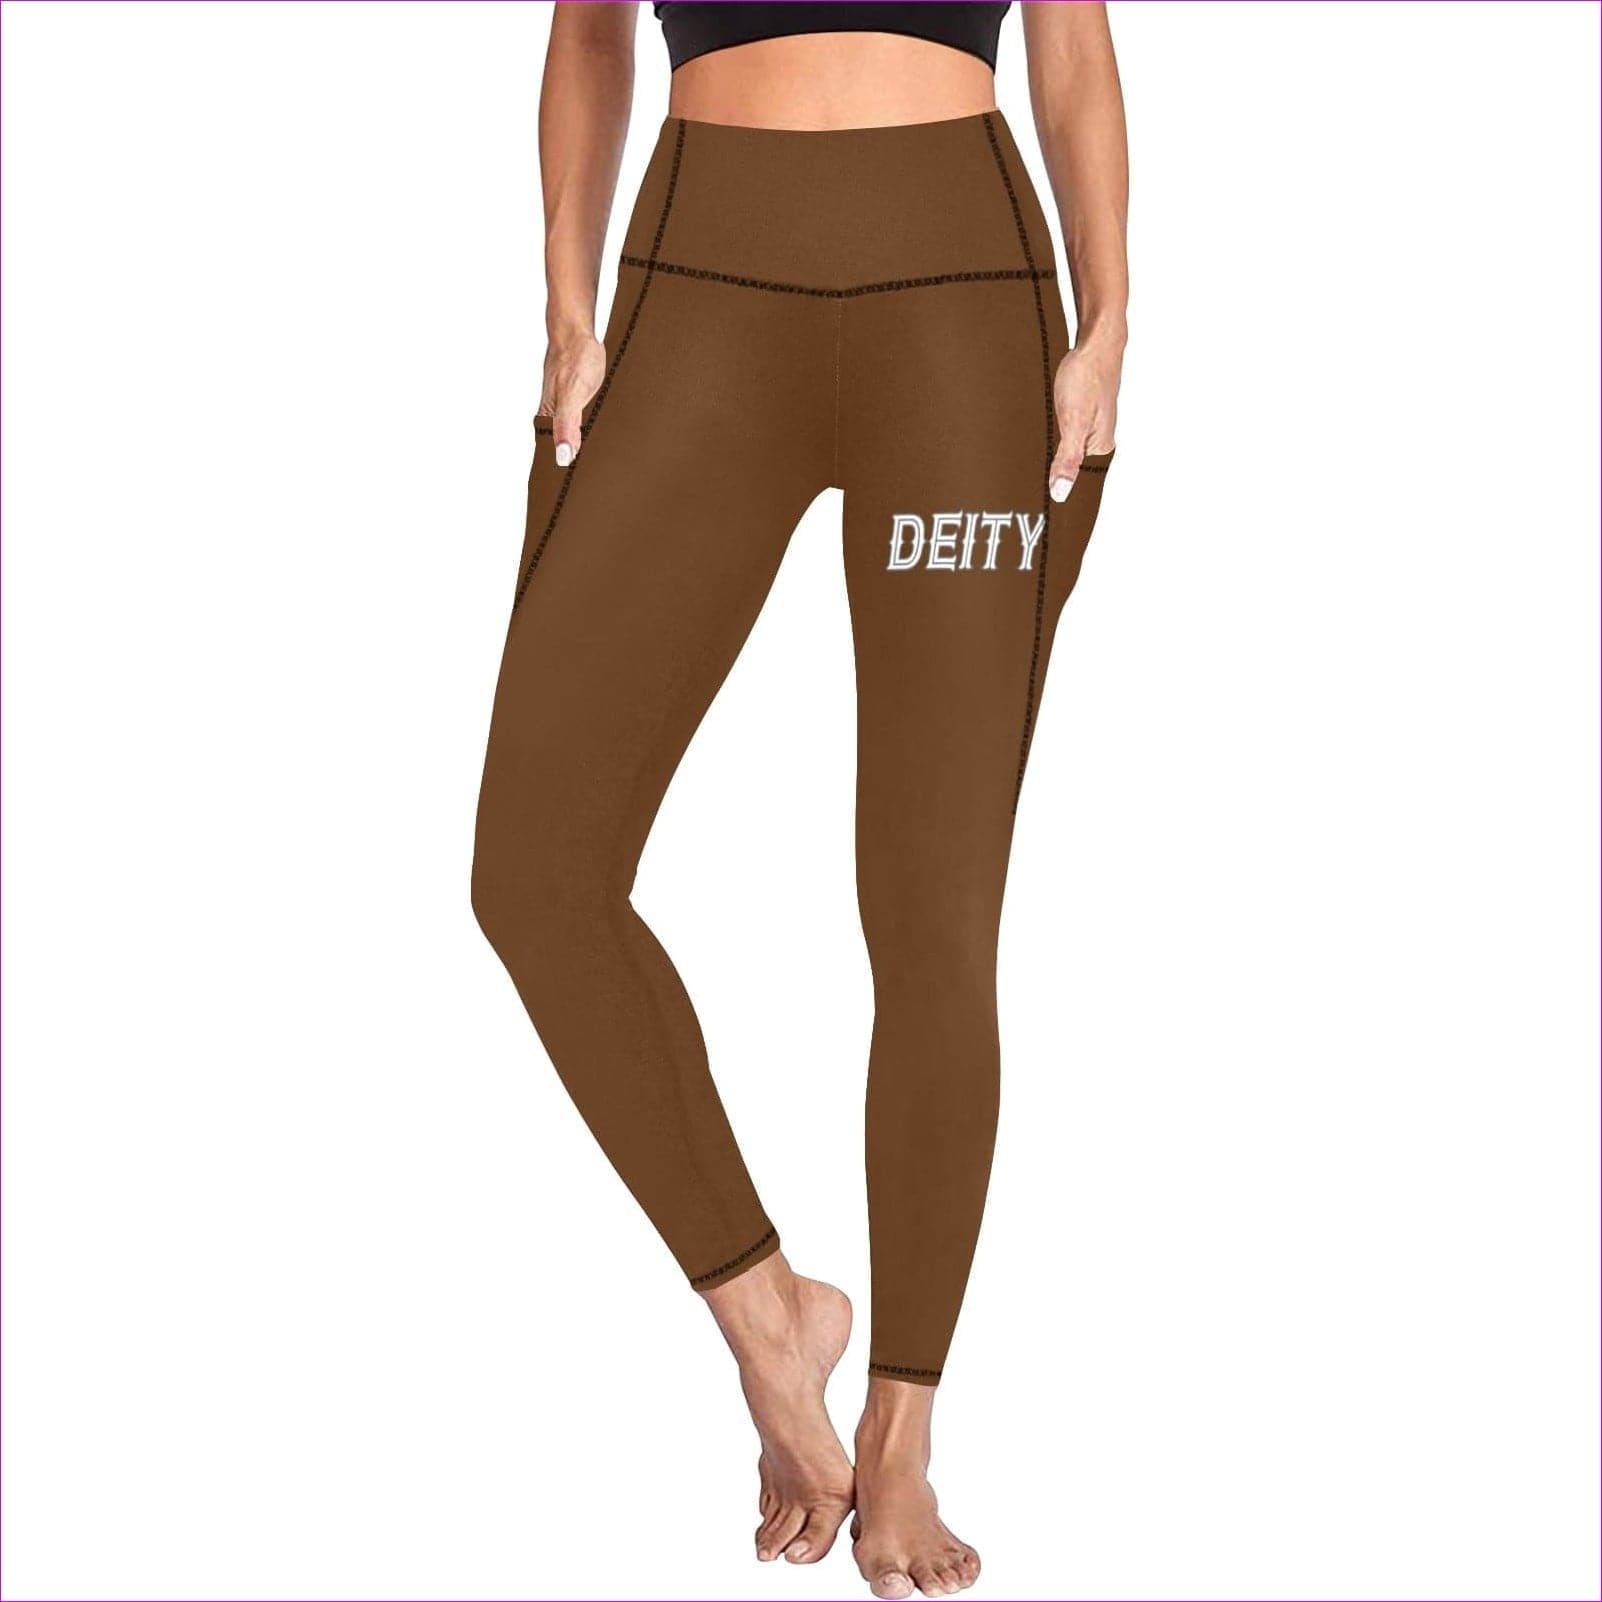 Deity High Waist Leggings w/ Pockets - 10 Colors - women's leggings at TFC&H Co.